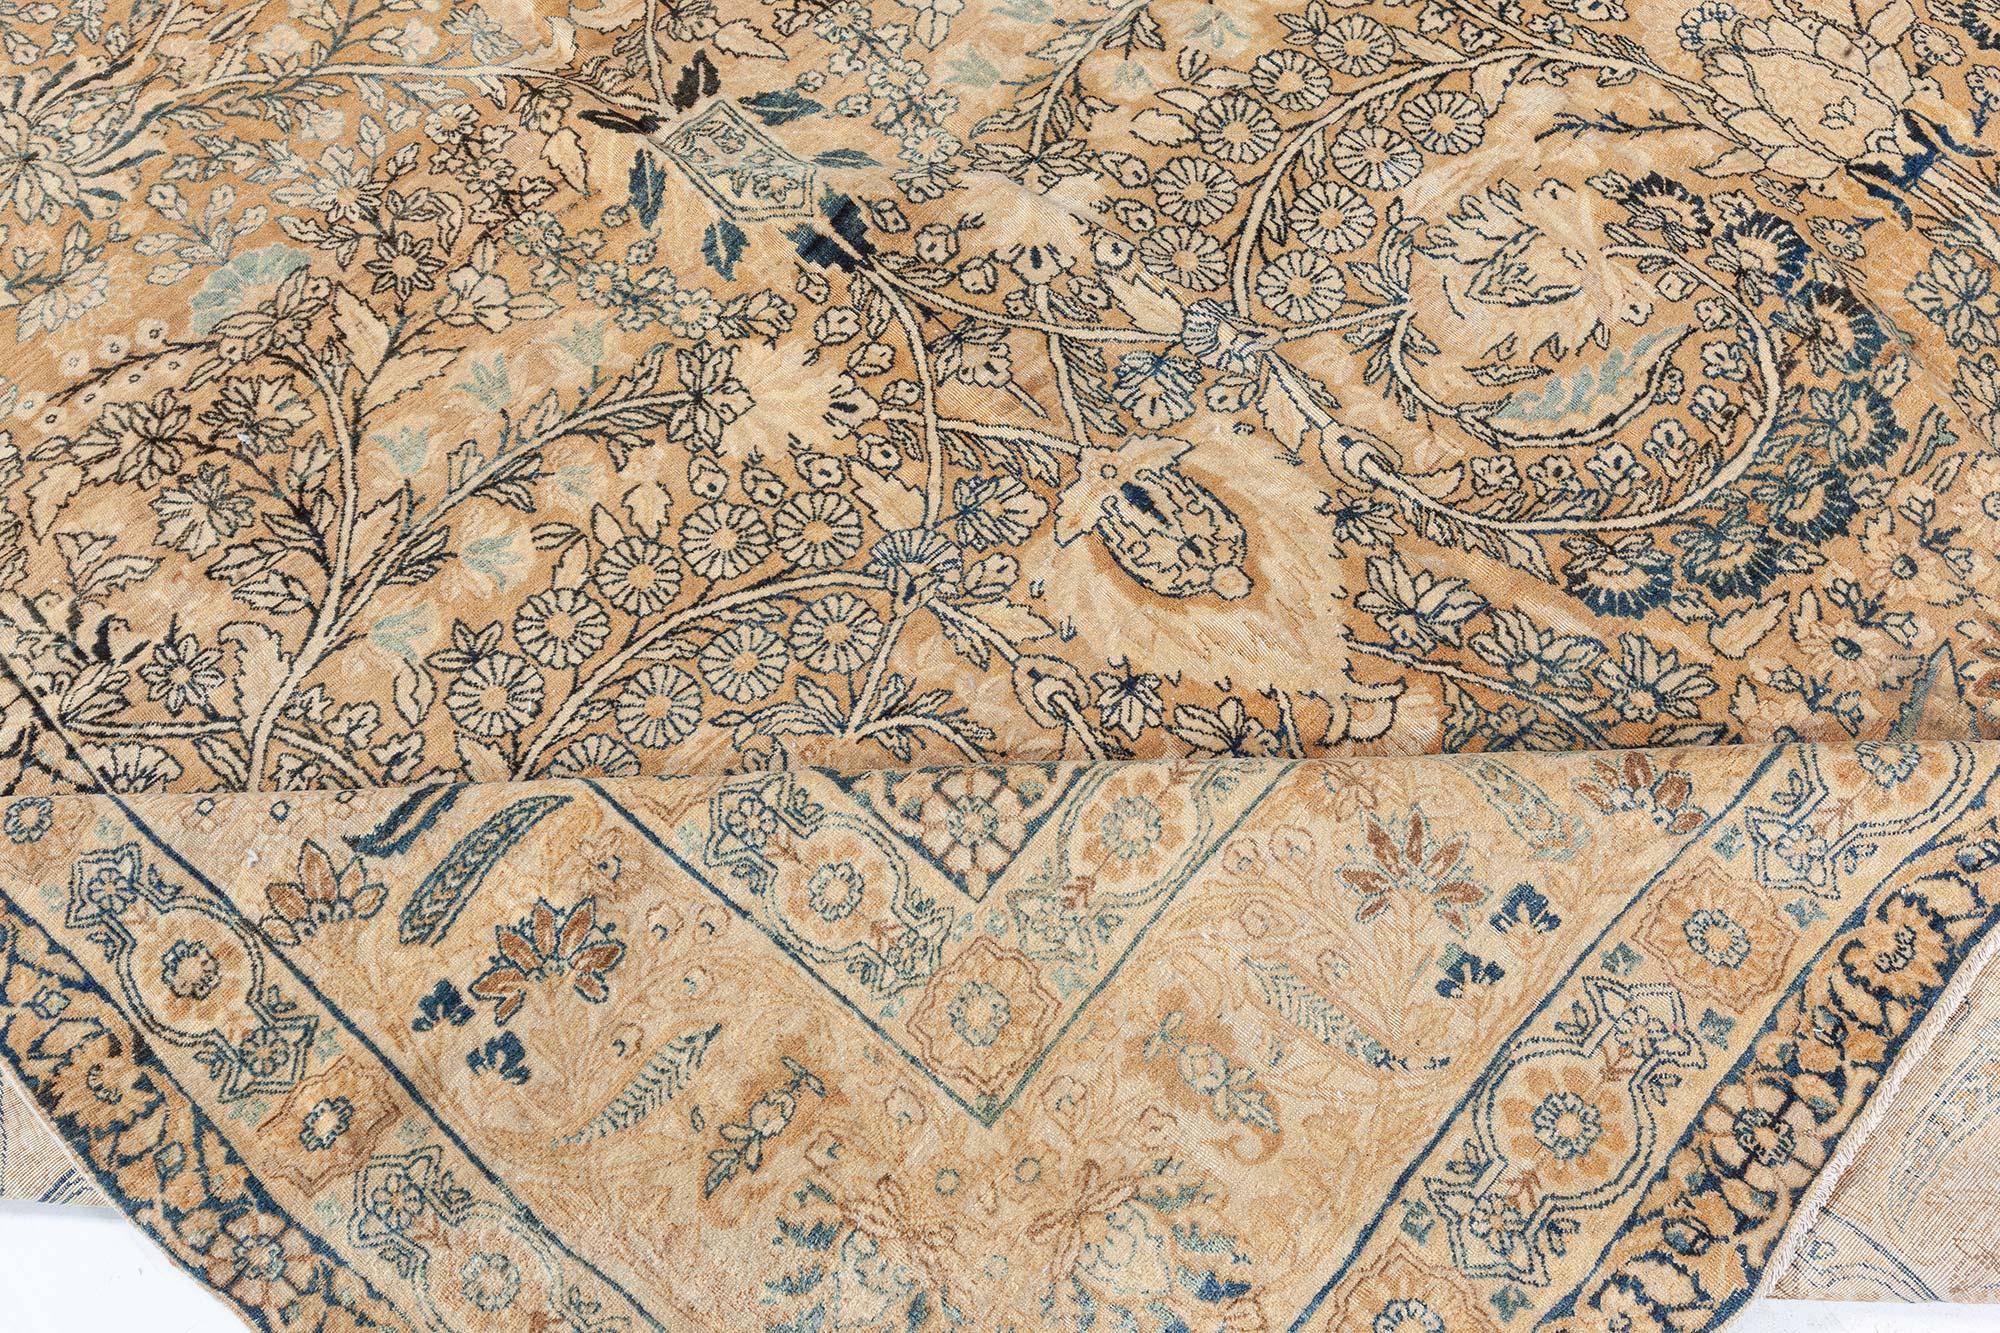 Authentic 19th century Persian Kirman carpet
Size: 11'8